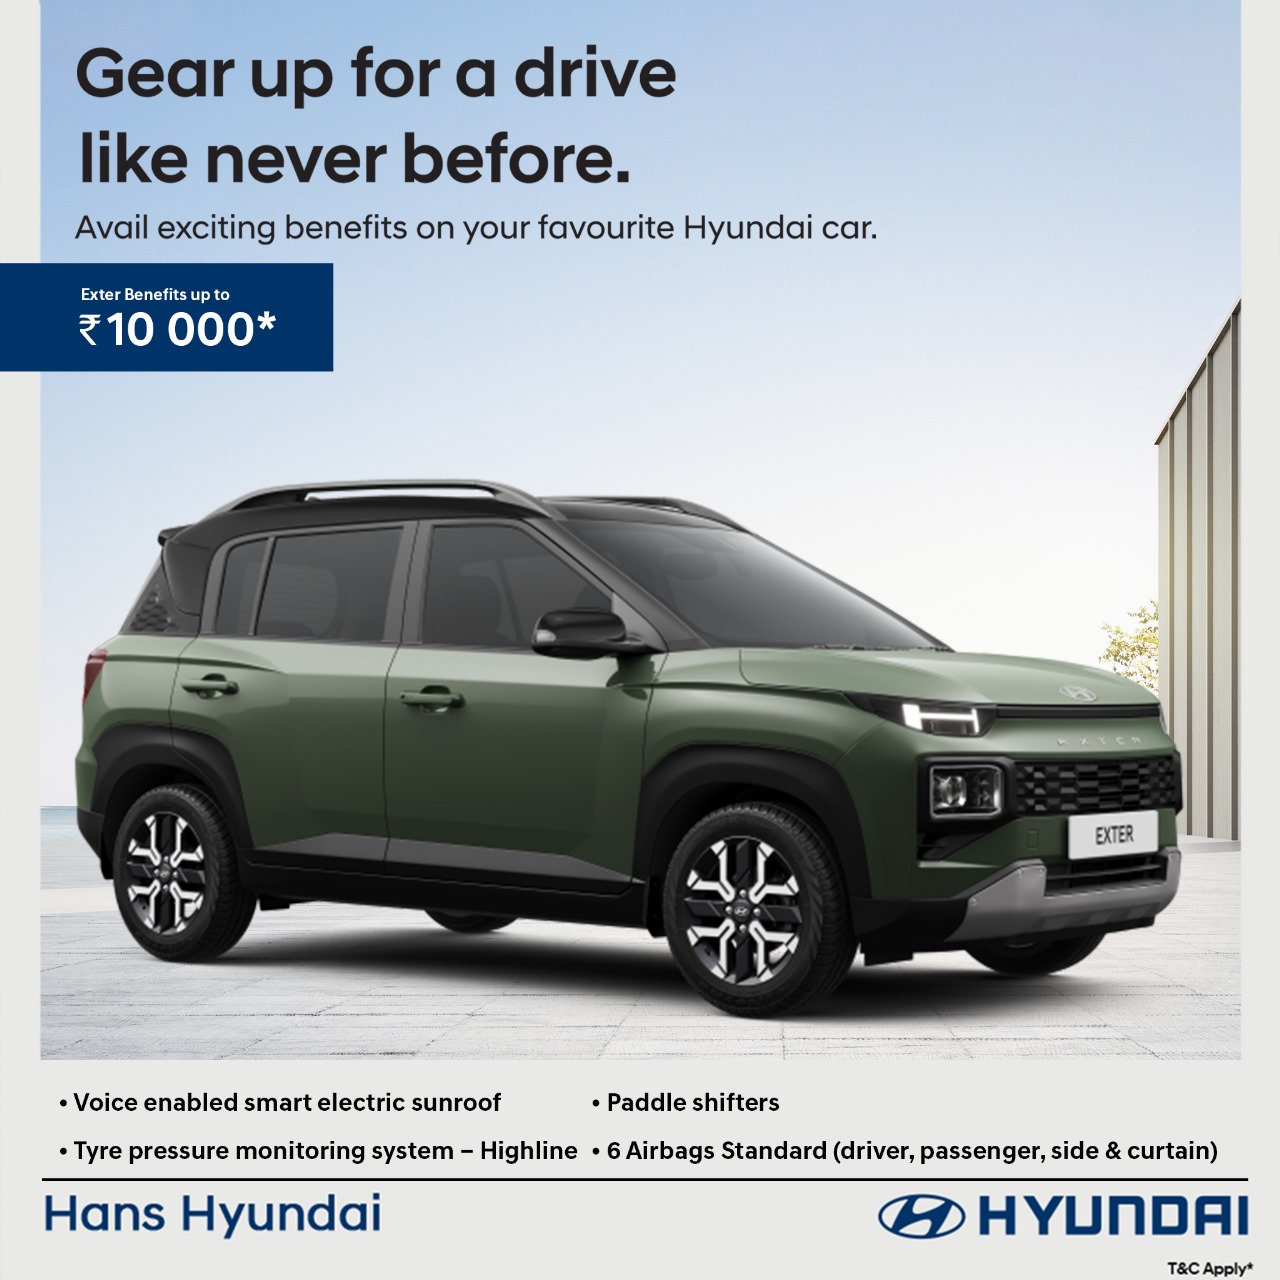 Hyundai Exter Offers